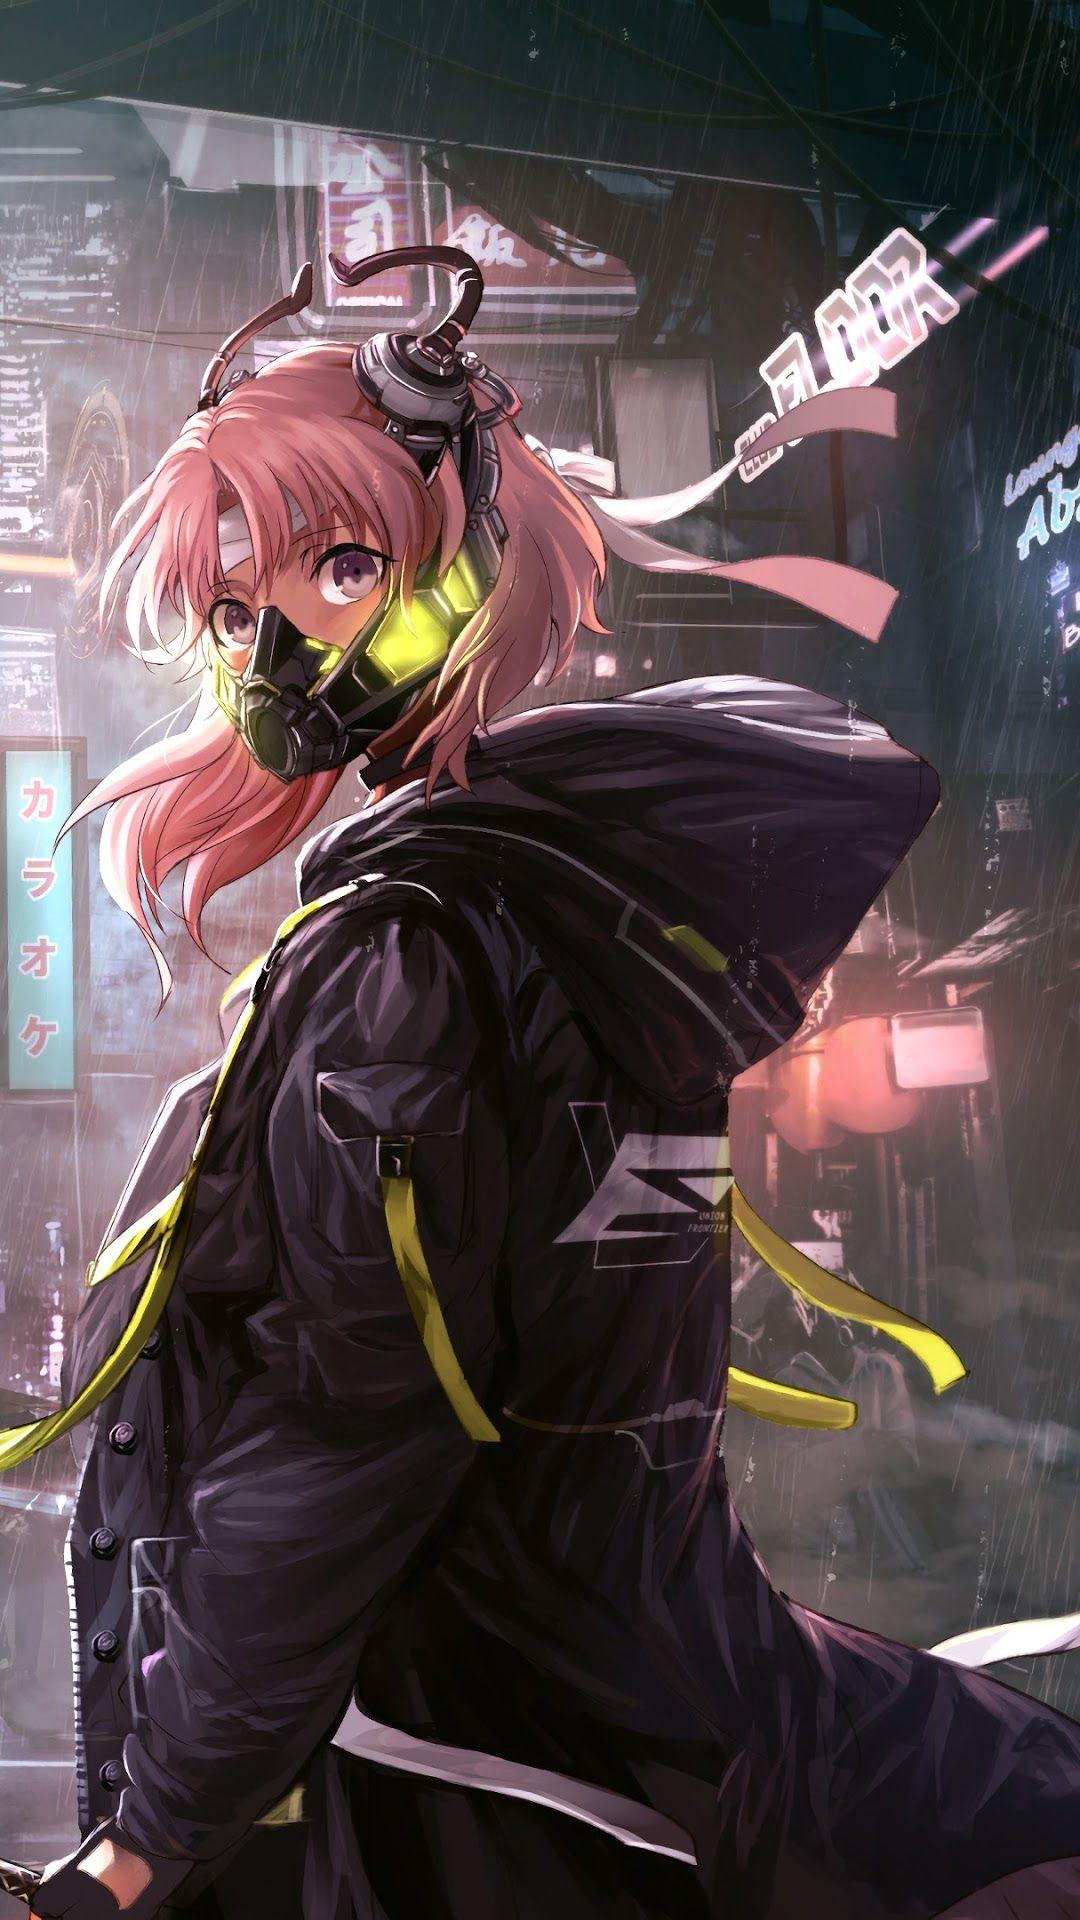 Cyberpunk Anime Girl Wallpapers Top Free Cyberpunk Anime Girl Backgrounds Wallpaperaccess 5376